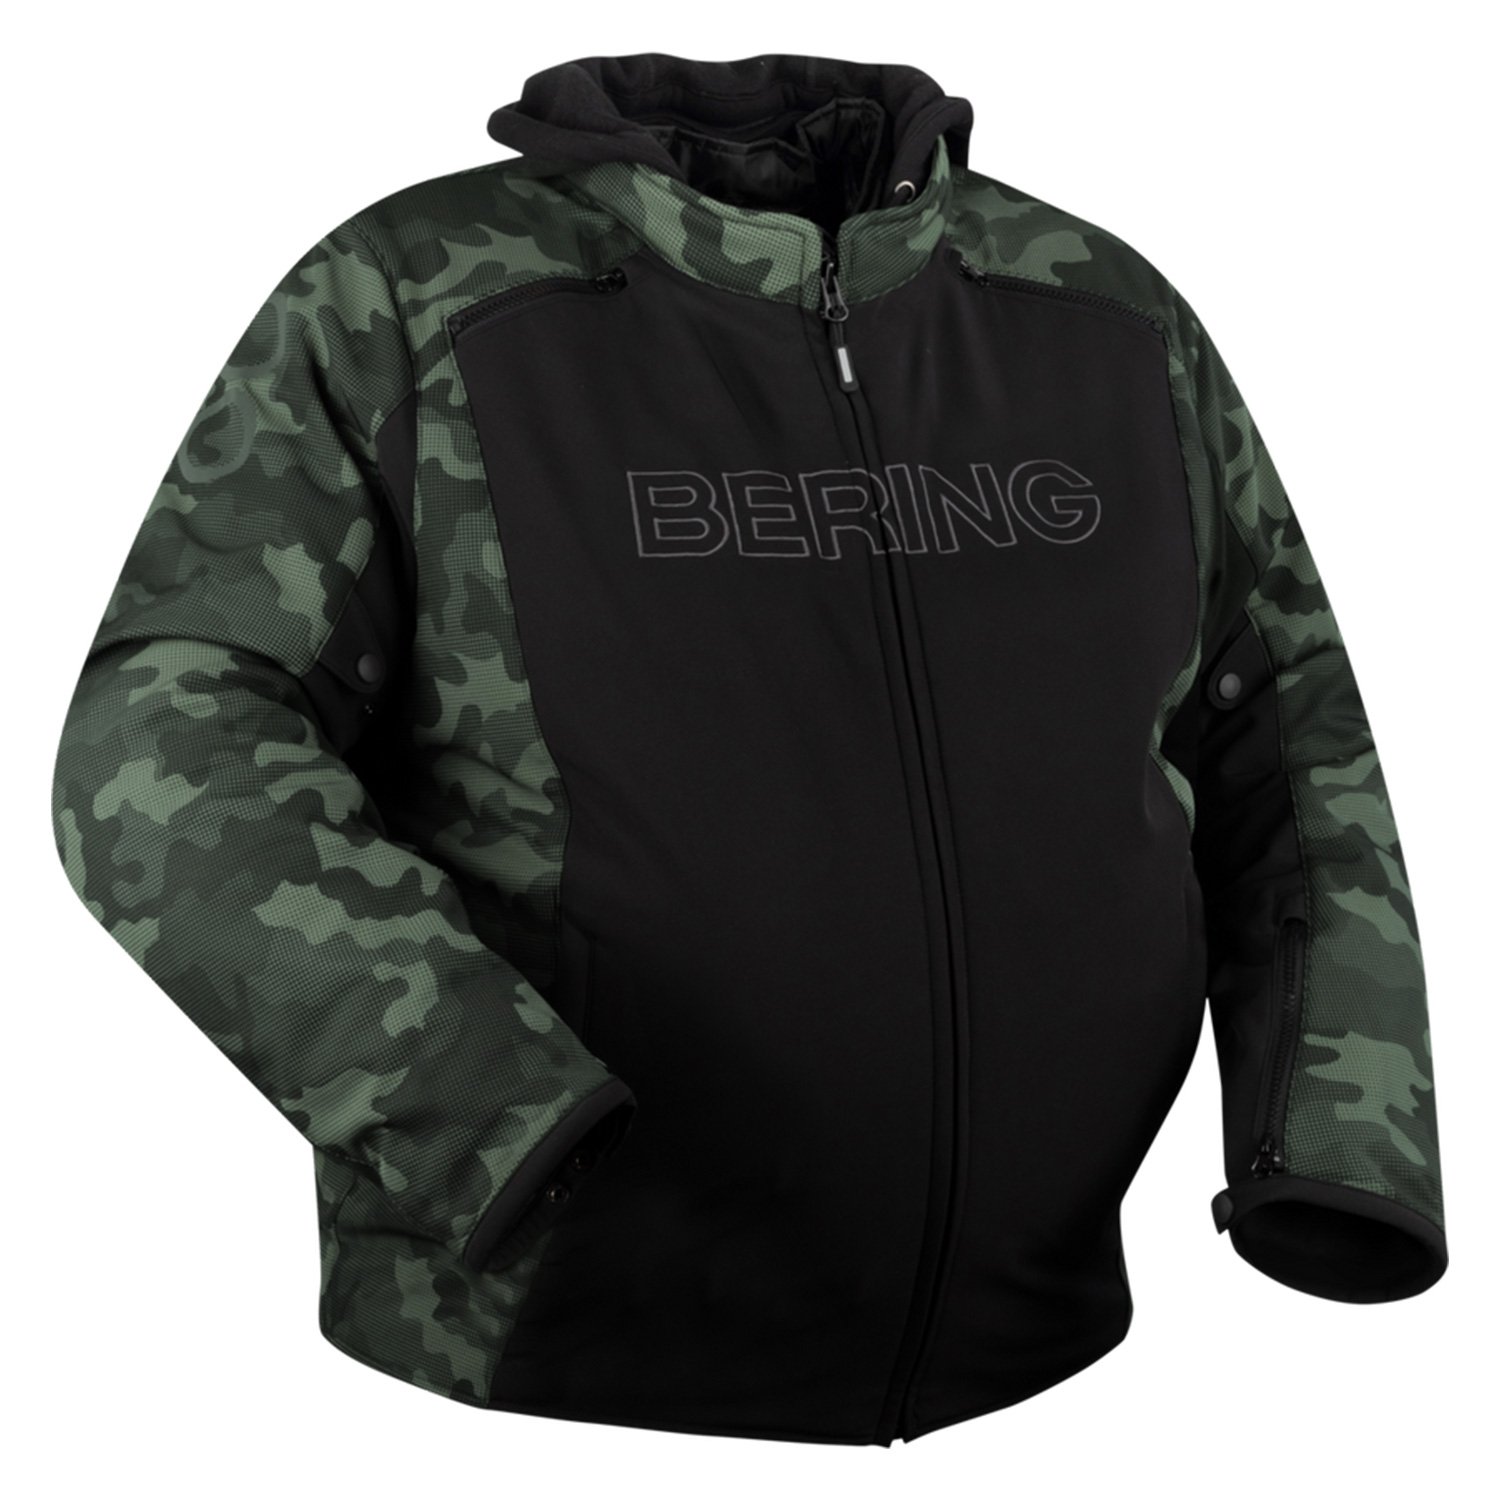 Image of Bering Davis King Size Jacket Black Camo Size 2XL ID 3660815184448